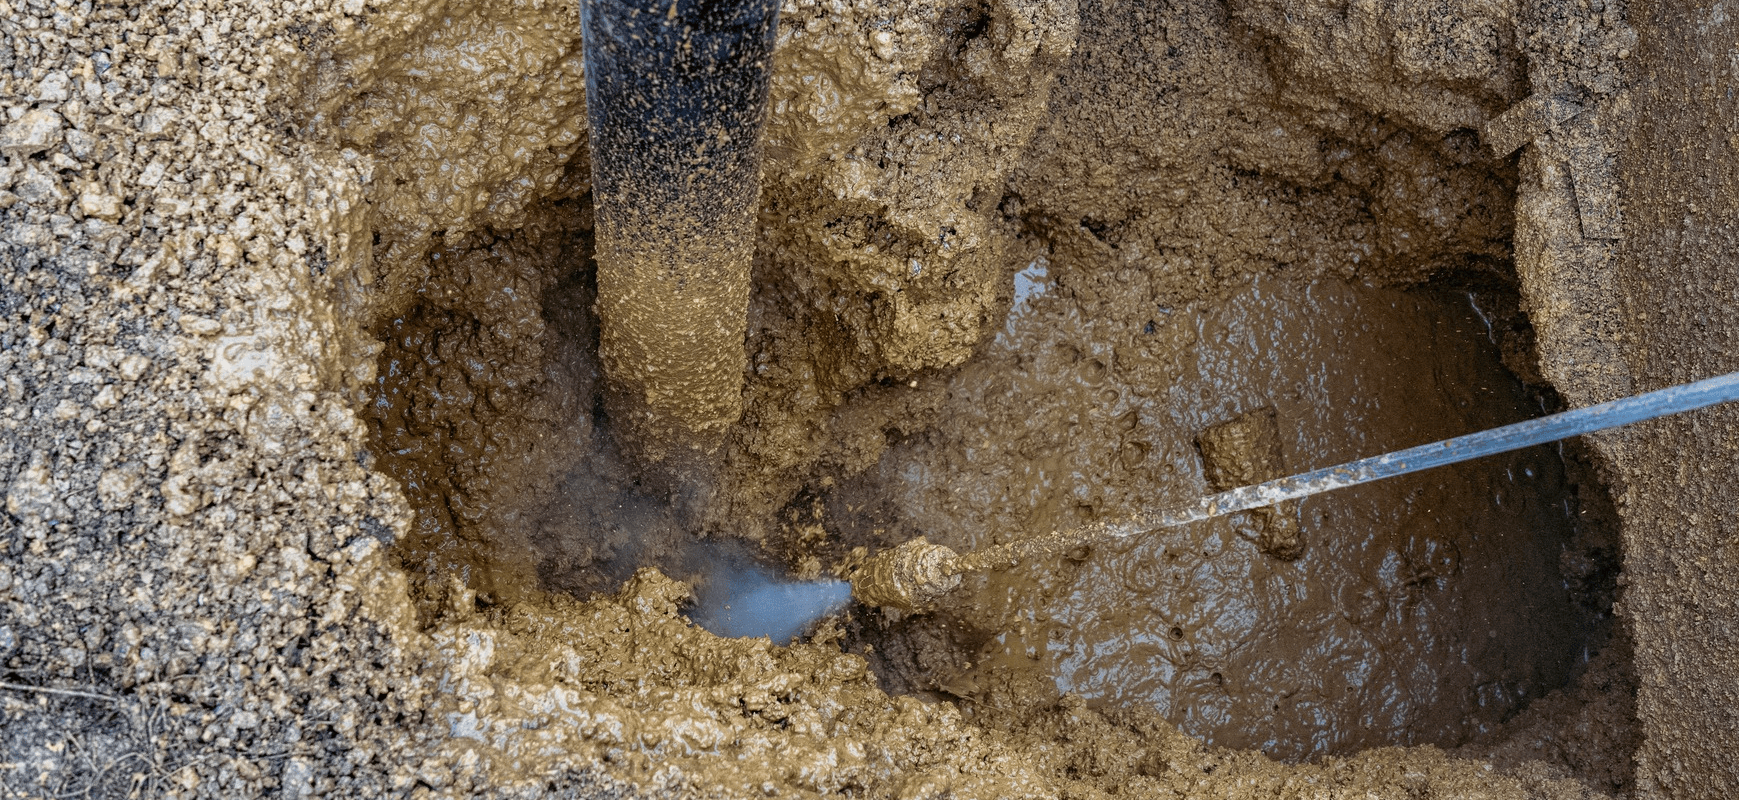 Utility Digging Fall River, MA